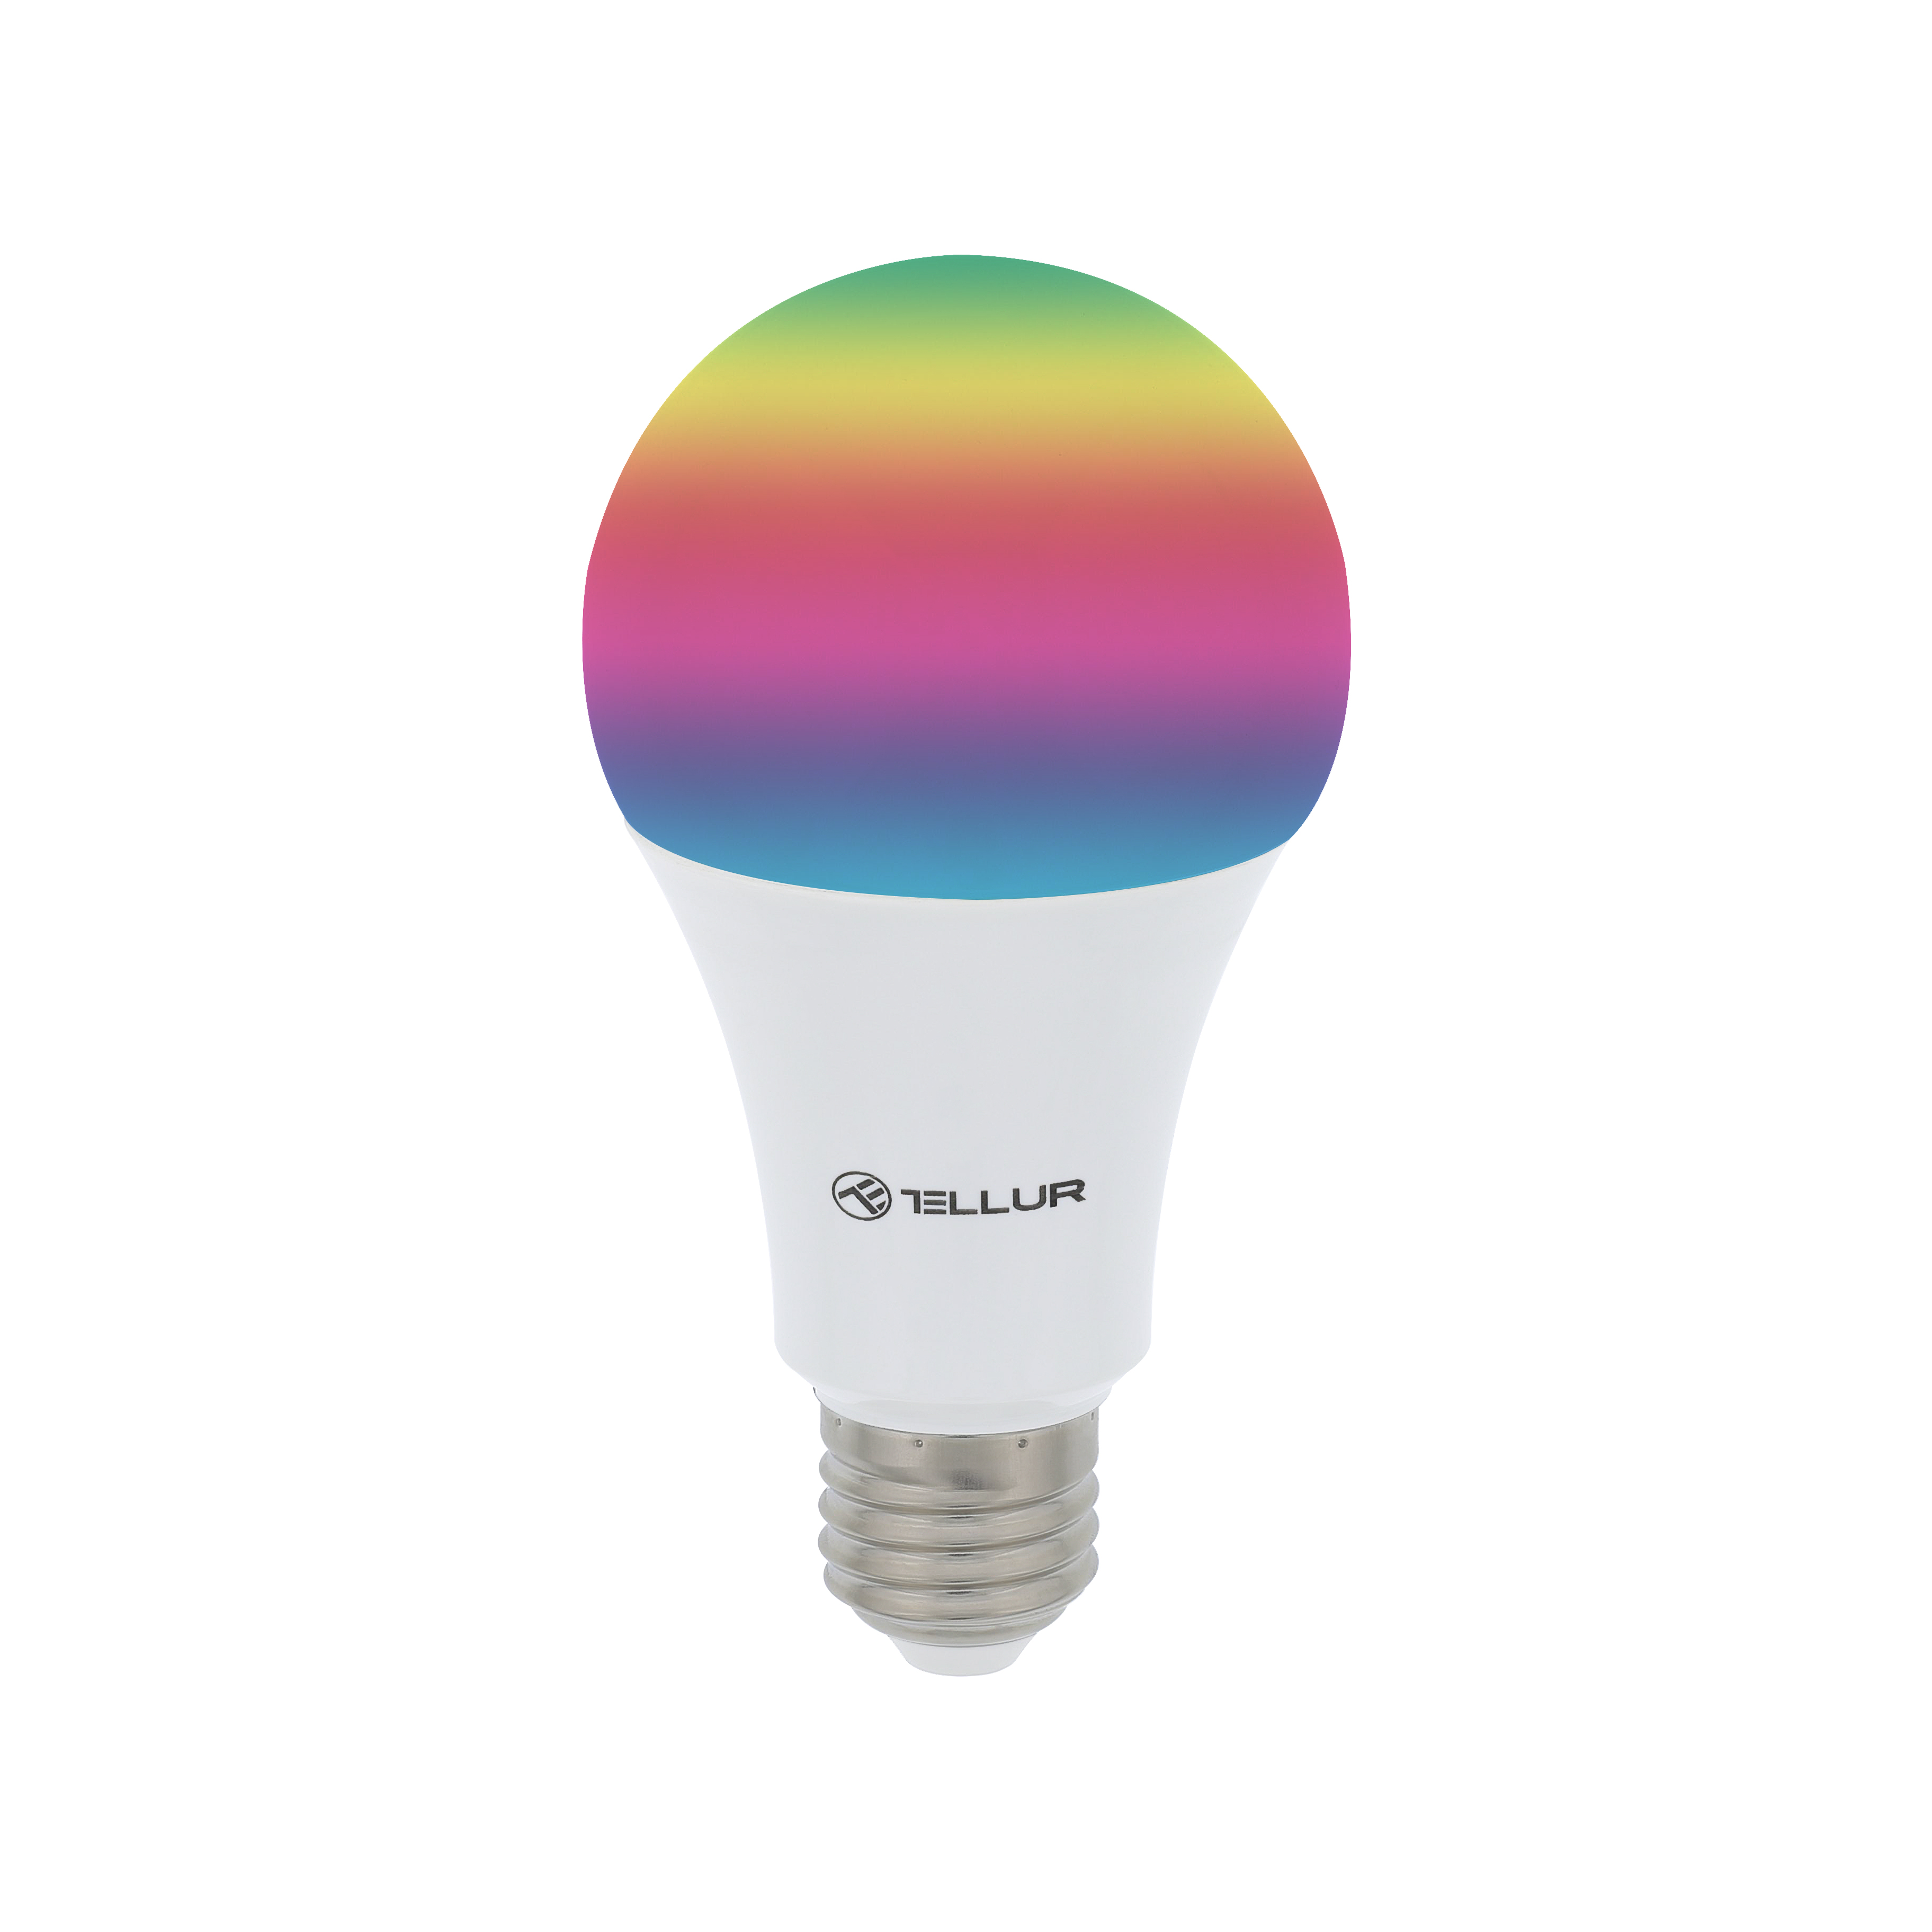 TELLUR Weiß, 10W, E27, RGB Warm, Glühbirne Smarte dimmbar WiFi